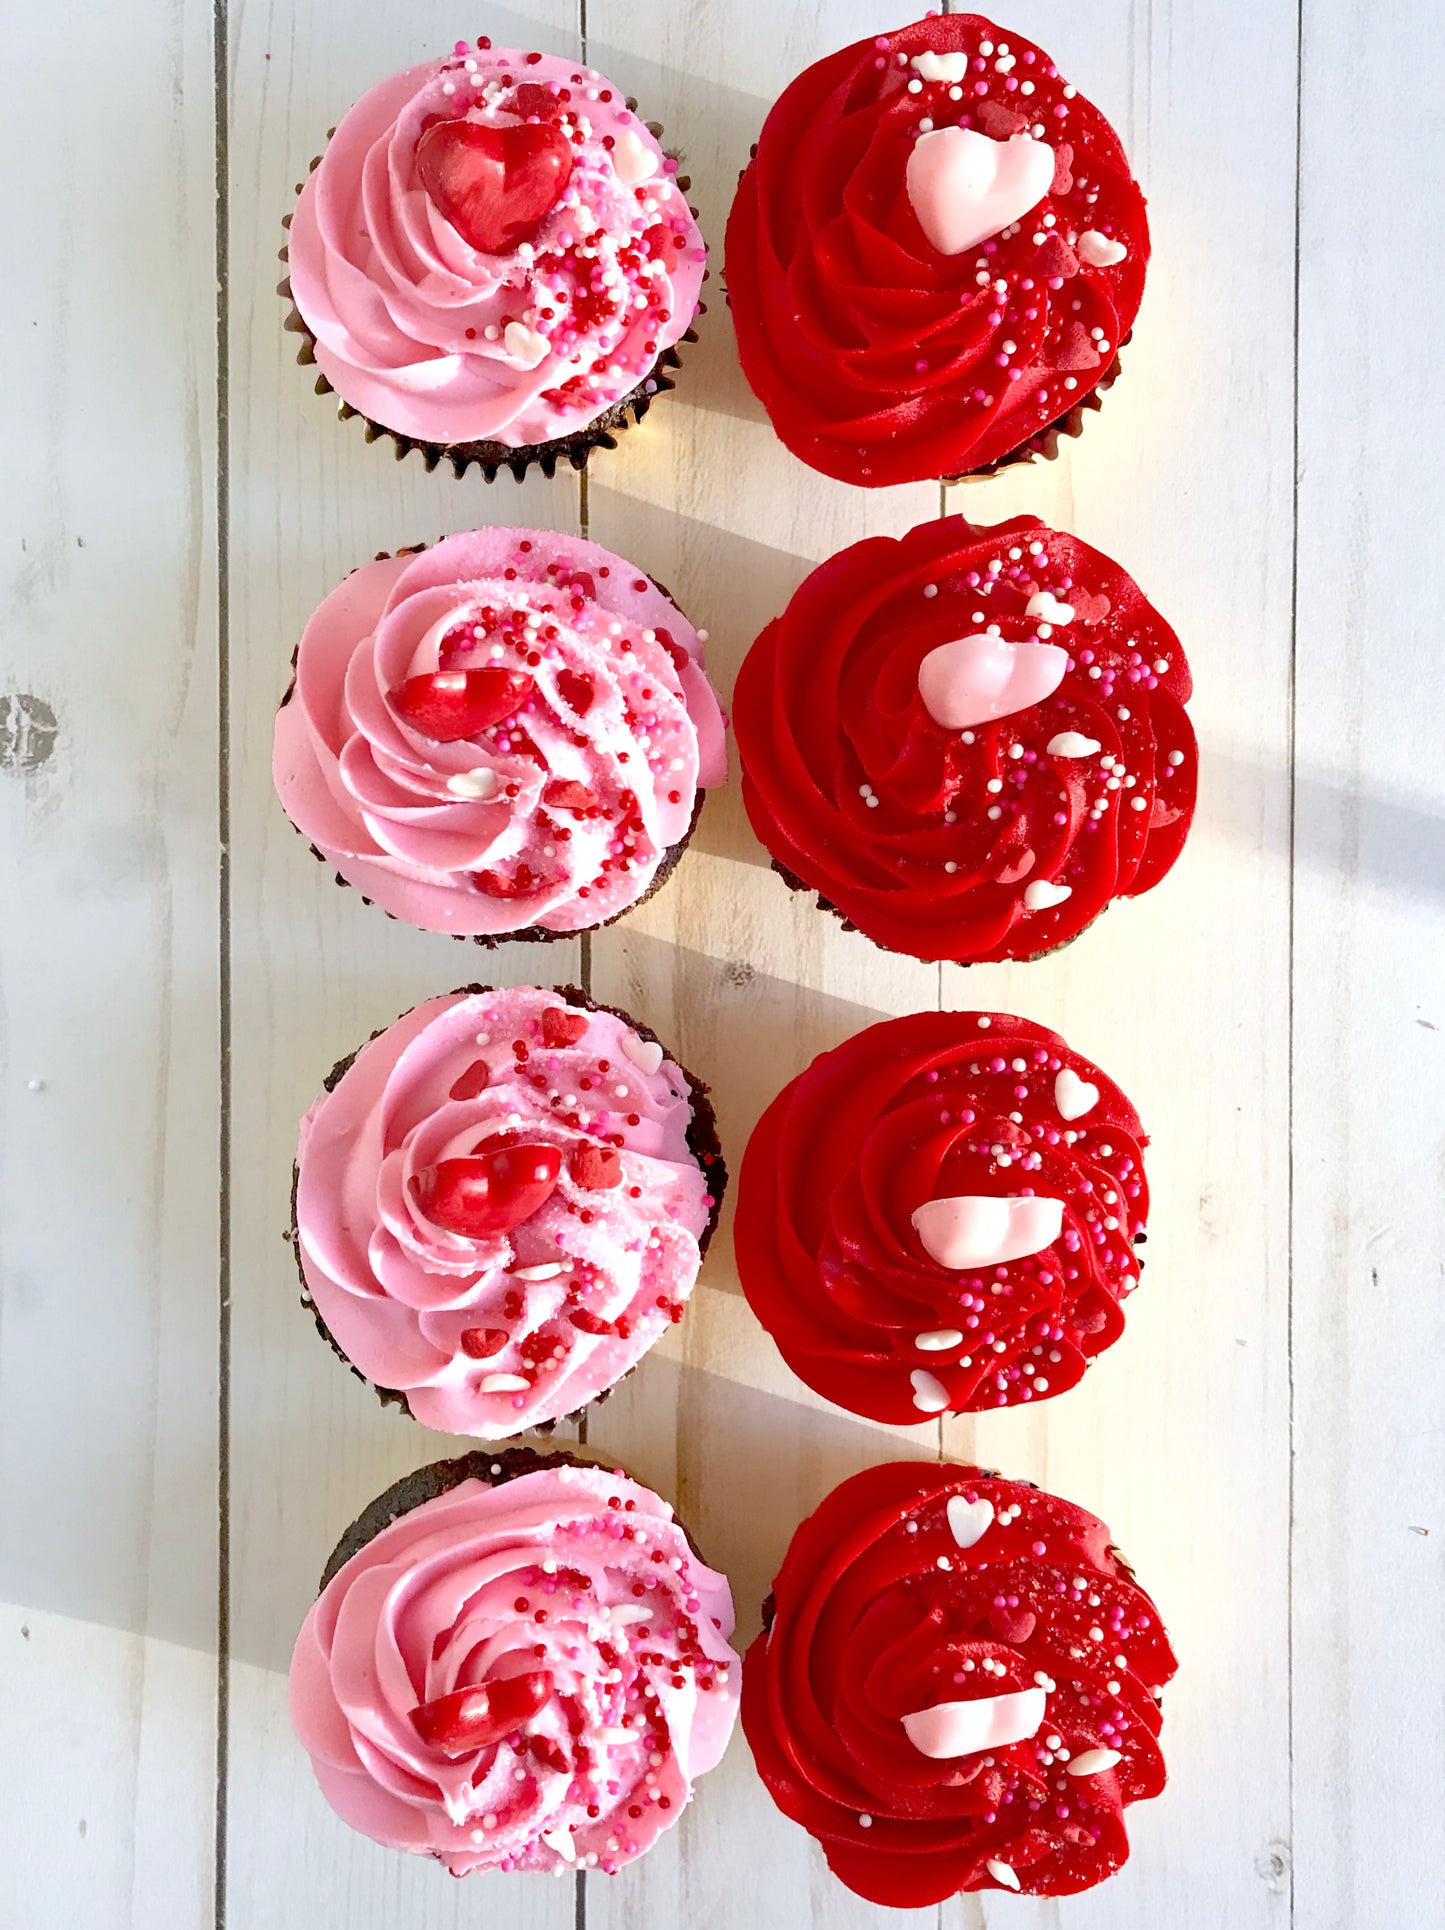 Valentine Heart Cupcakes